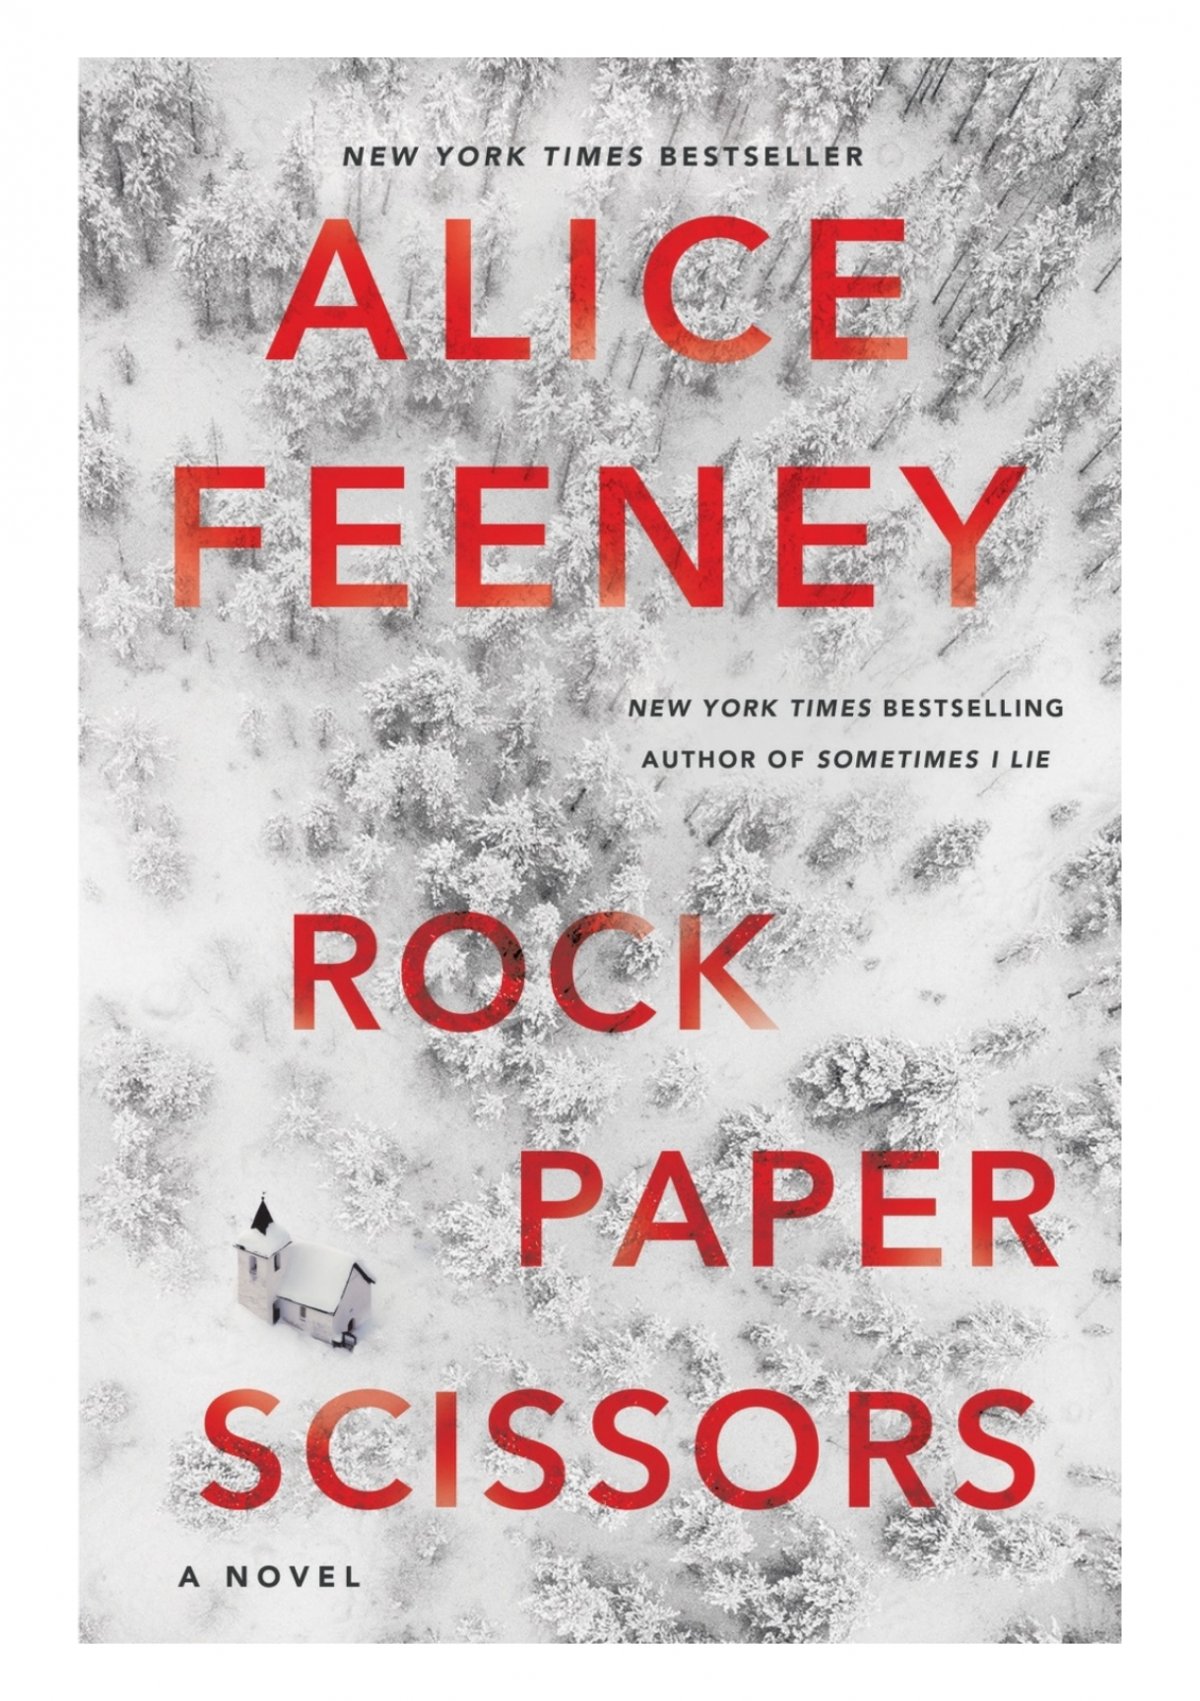 Rock Paper Scissors Audiobook by Alice Feeney - Free Sample